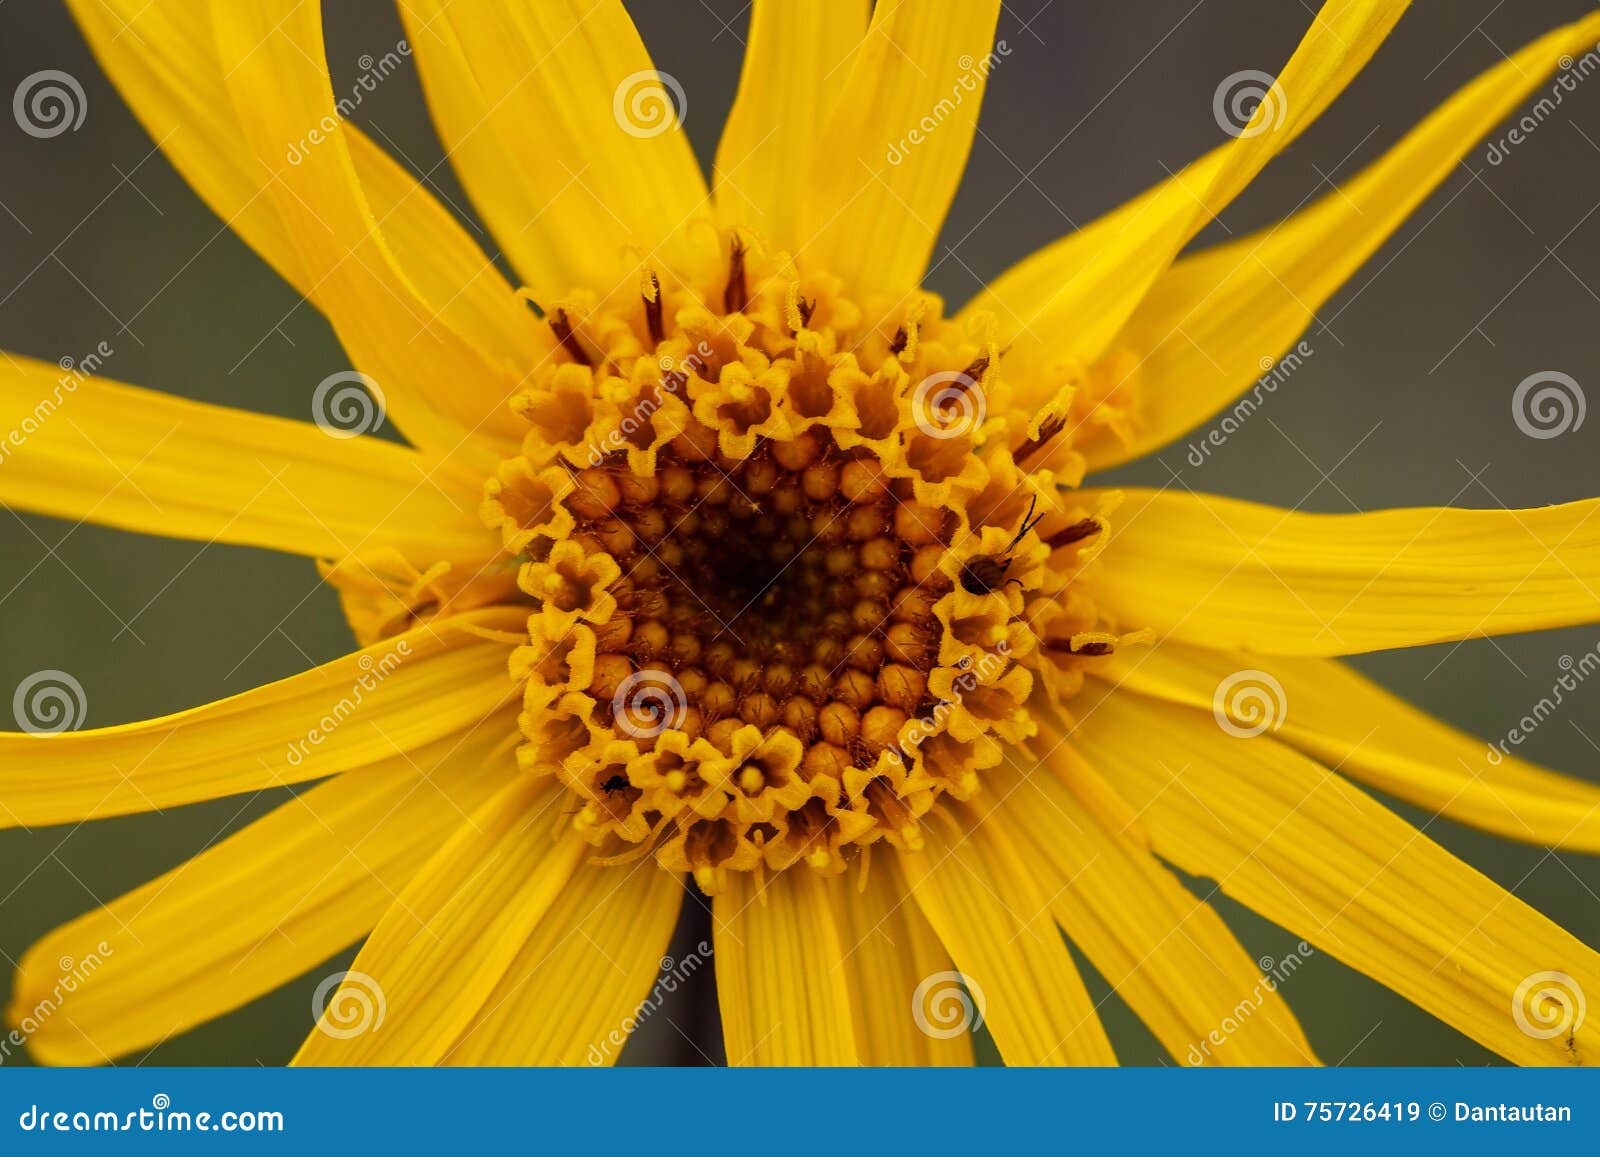 close up of arnica montana flower